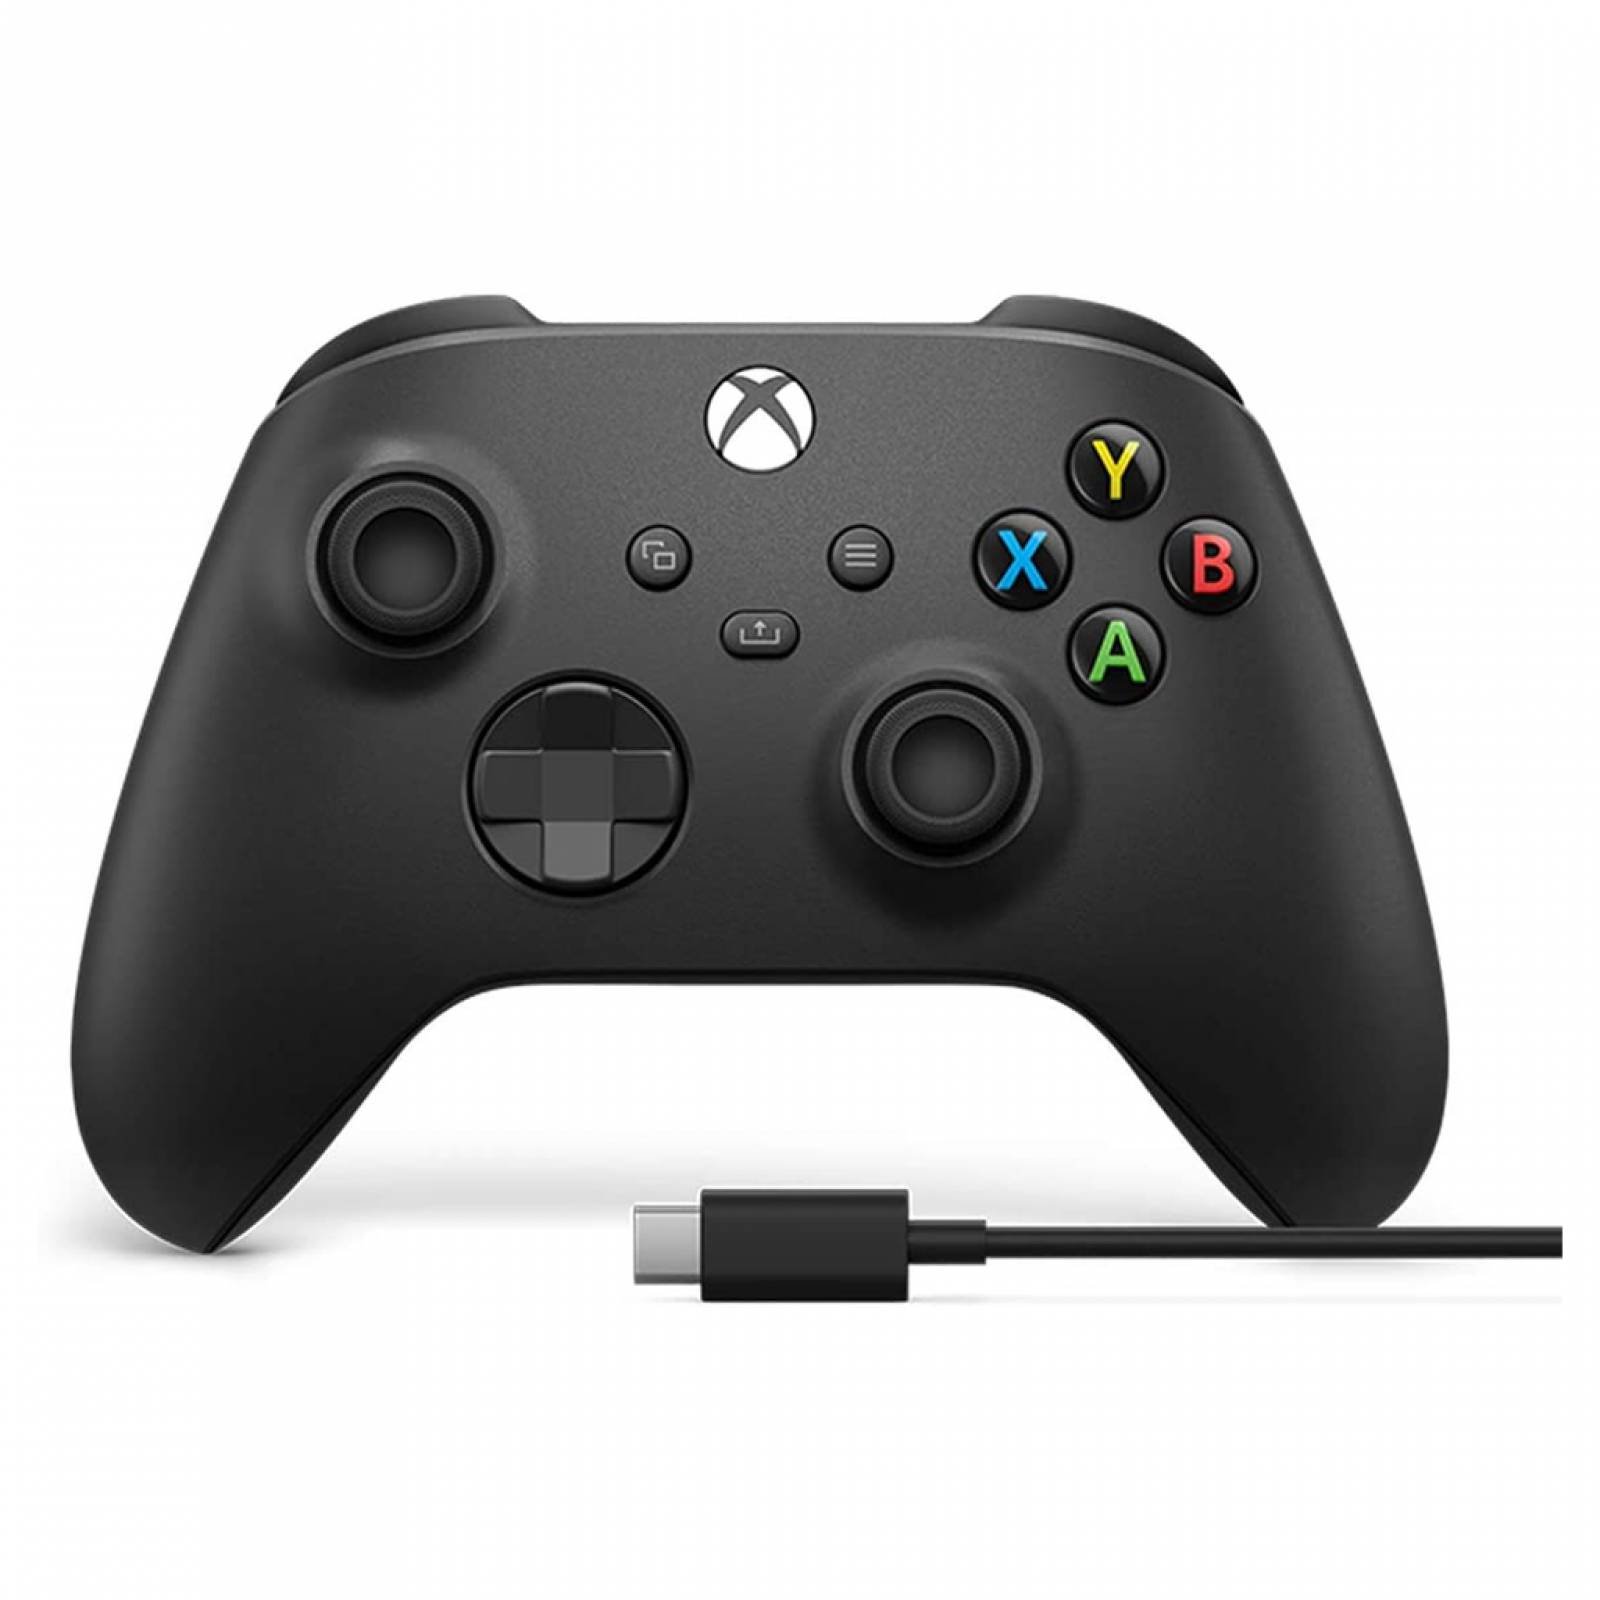 Aplicar a la batería recargable del mando Xbox One para Xbox One, Xbox One  S, mando con cable de carga USB -1200mah